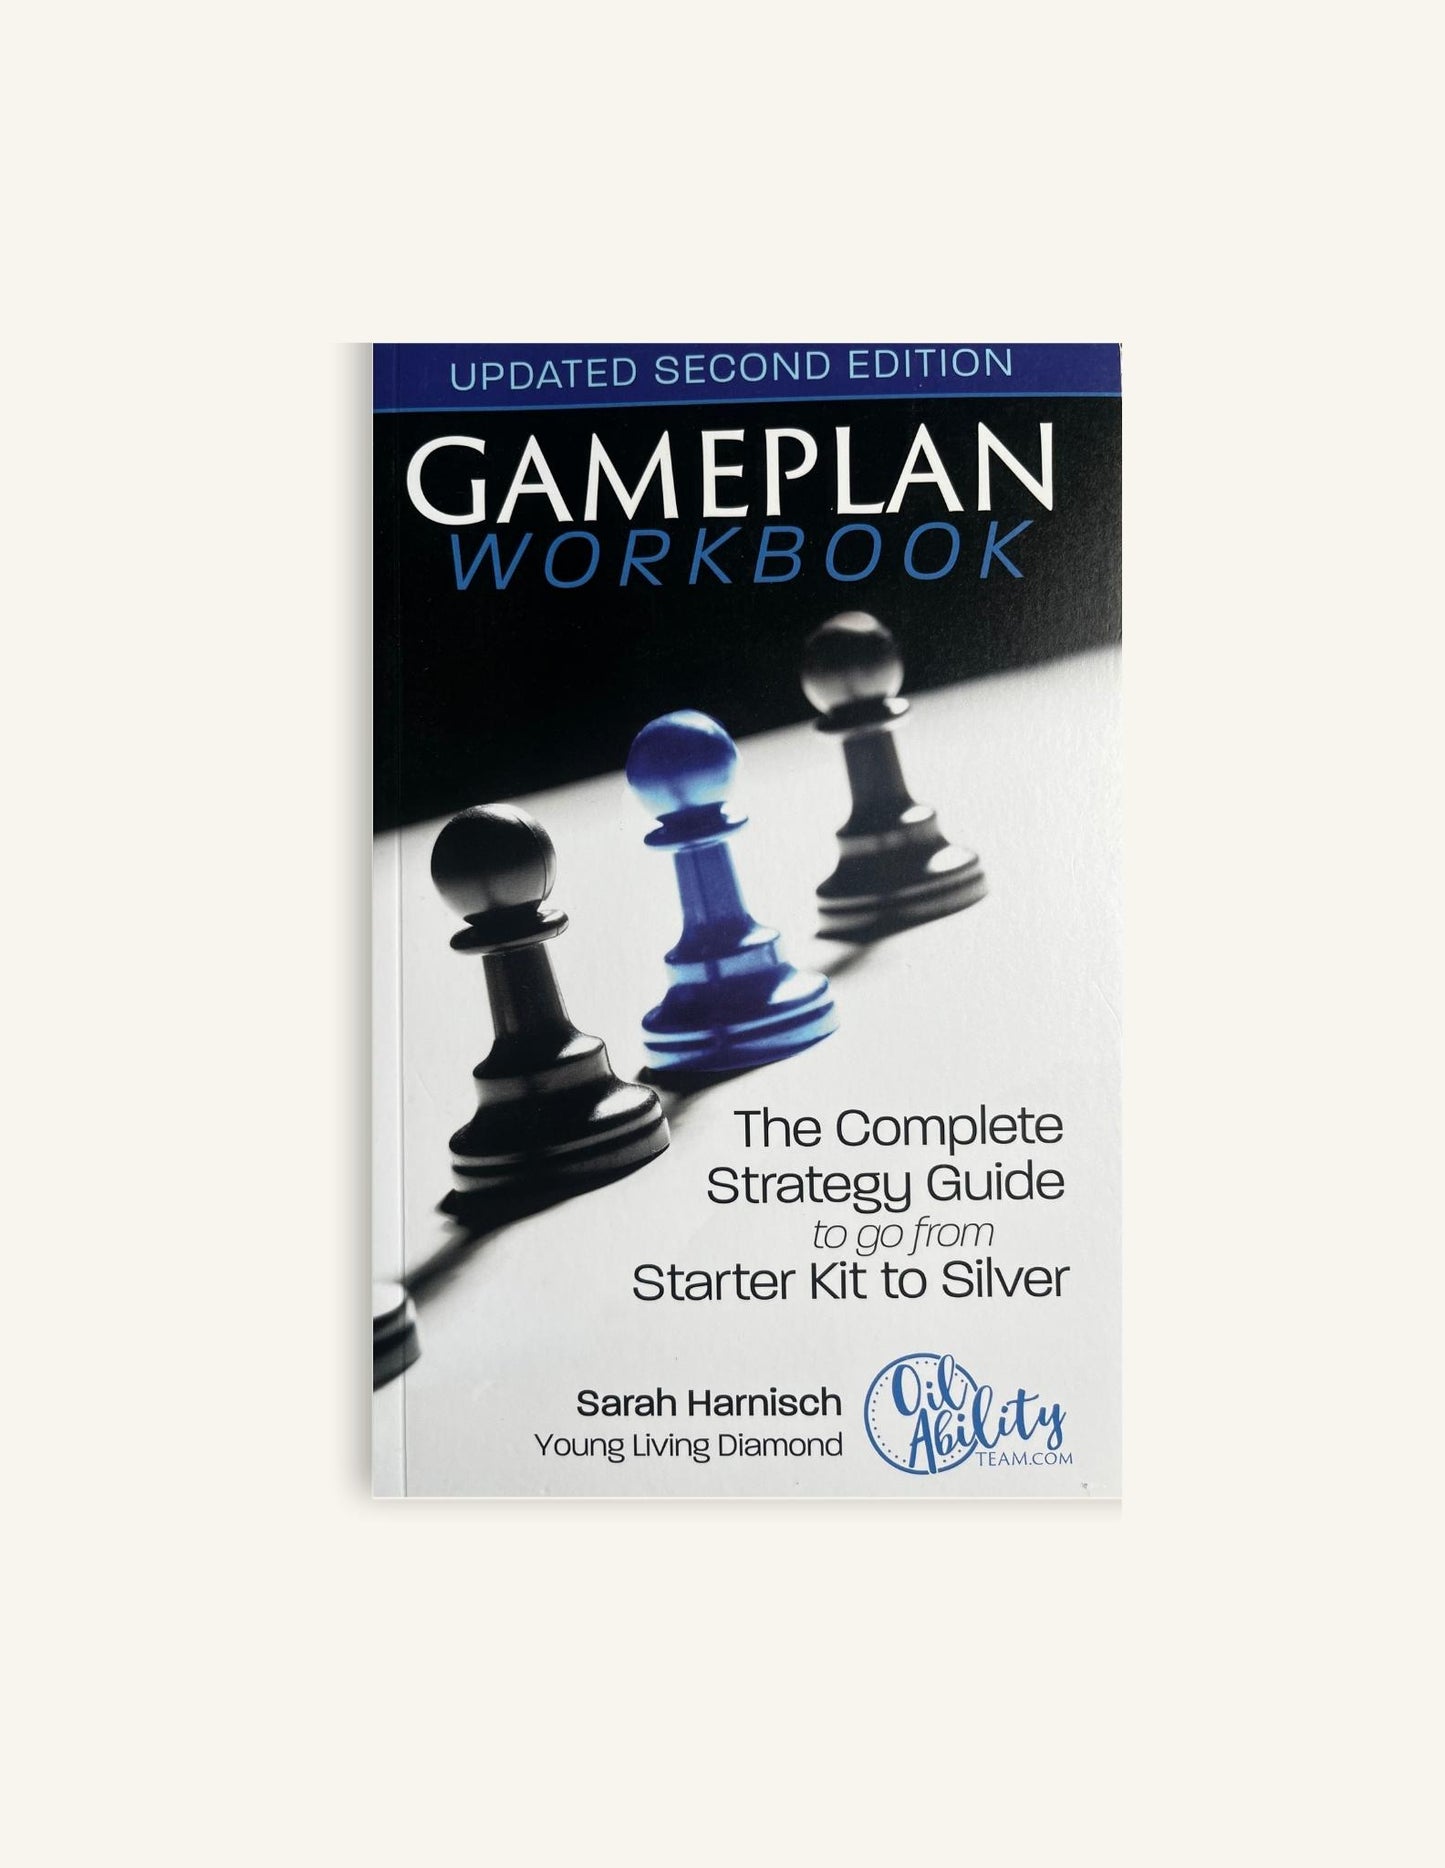 Gameplan Workbook - 2nd Edition, Sarah Harnish